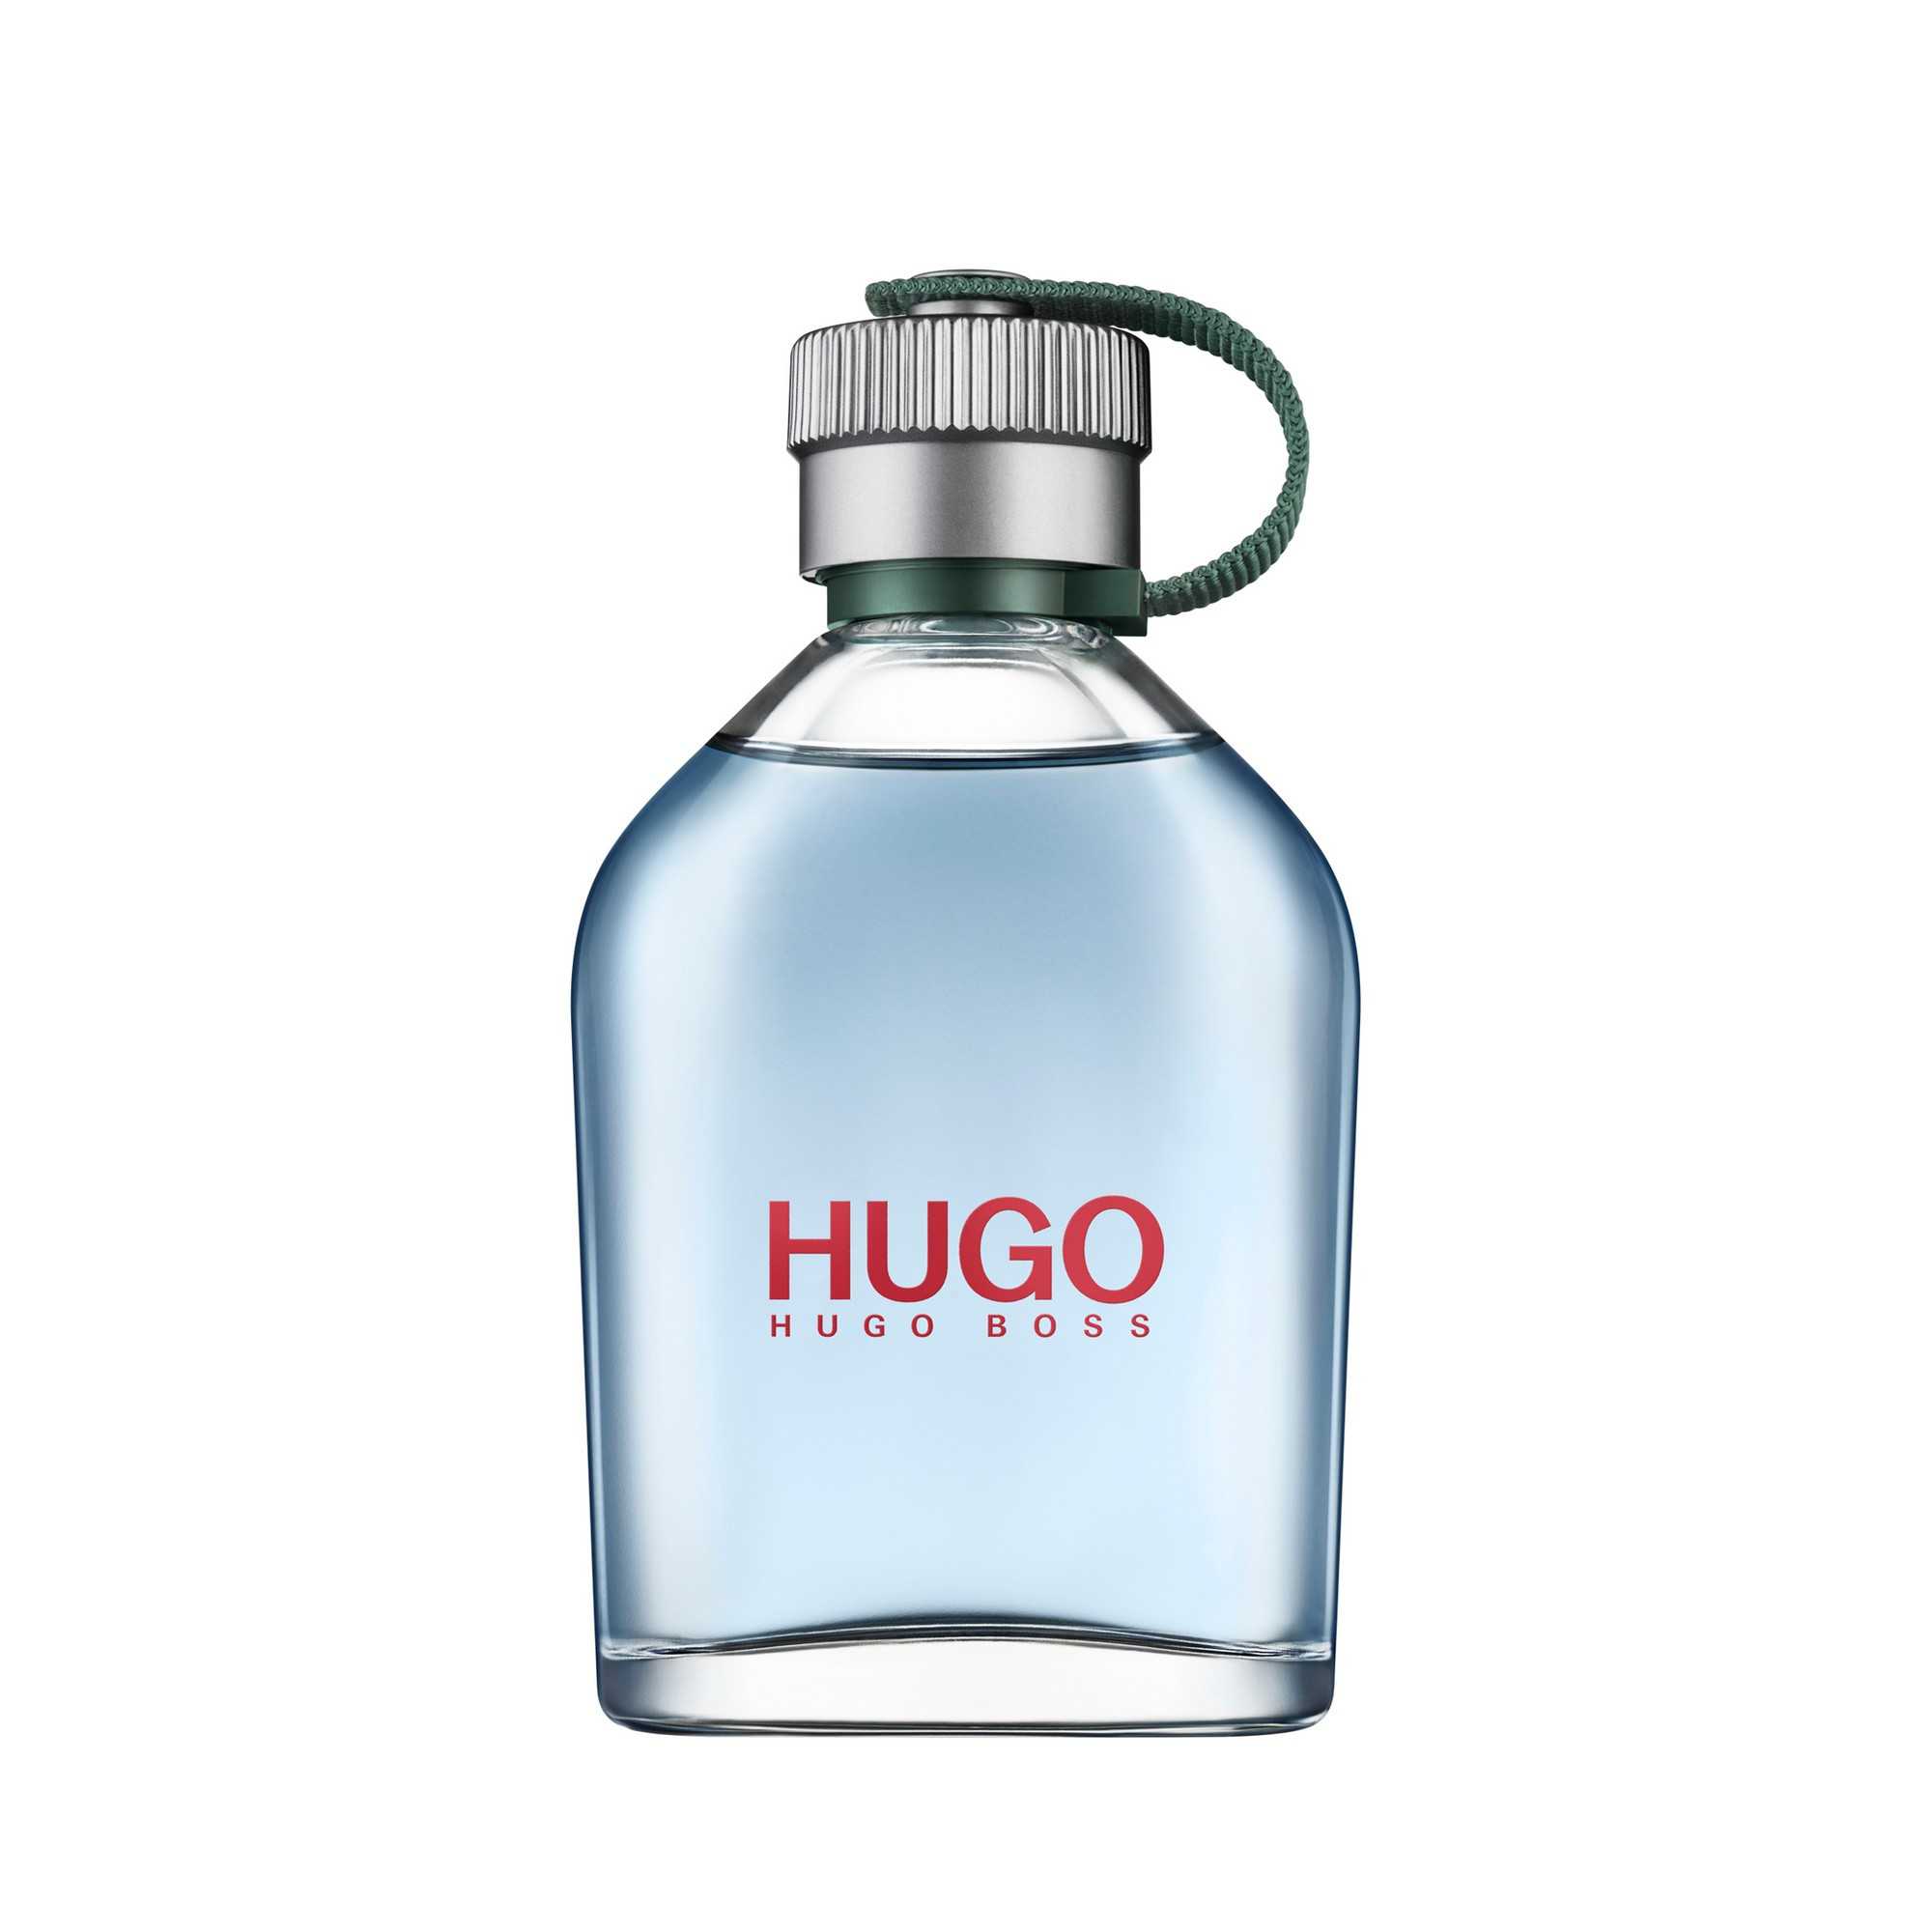 Цена духов hugo boss мужские. Hugo Boss men 125ml EDT. Hugo Boss Hugo men 100 мл. Hugo Boss man 125 ml. Hugo Boss Hugo man 200ml.